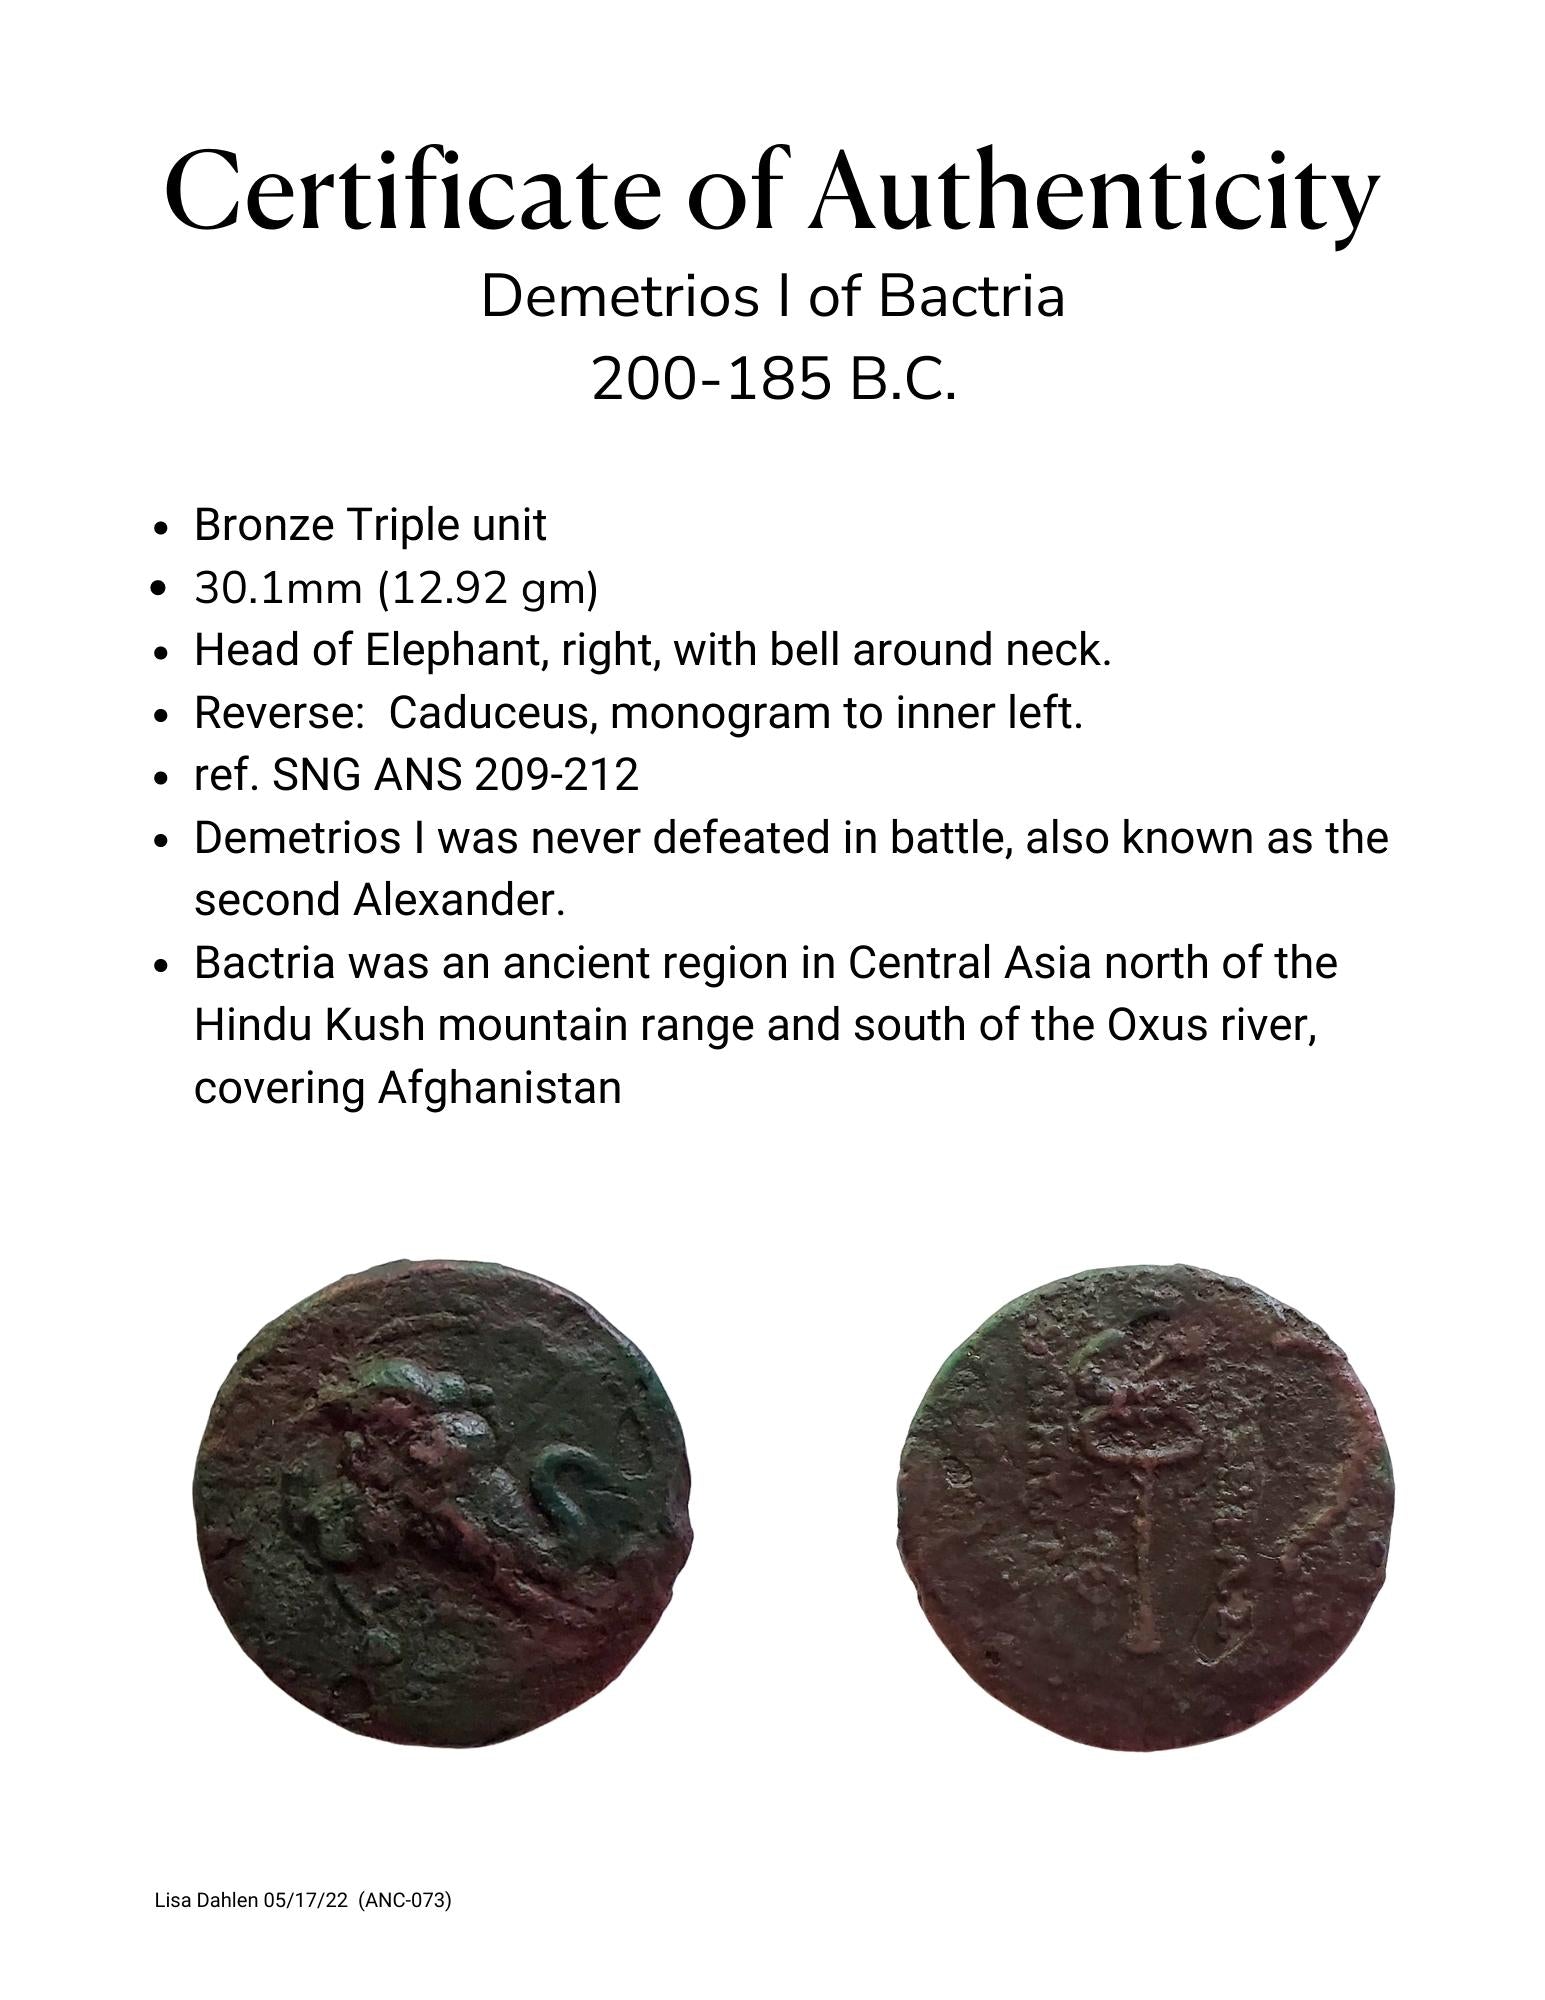 Greek Bronze Bactria Caduceus and Elephant (073)